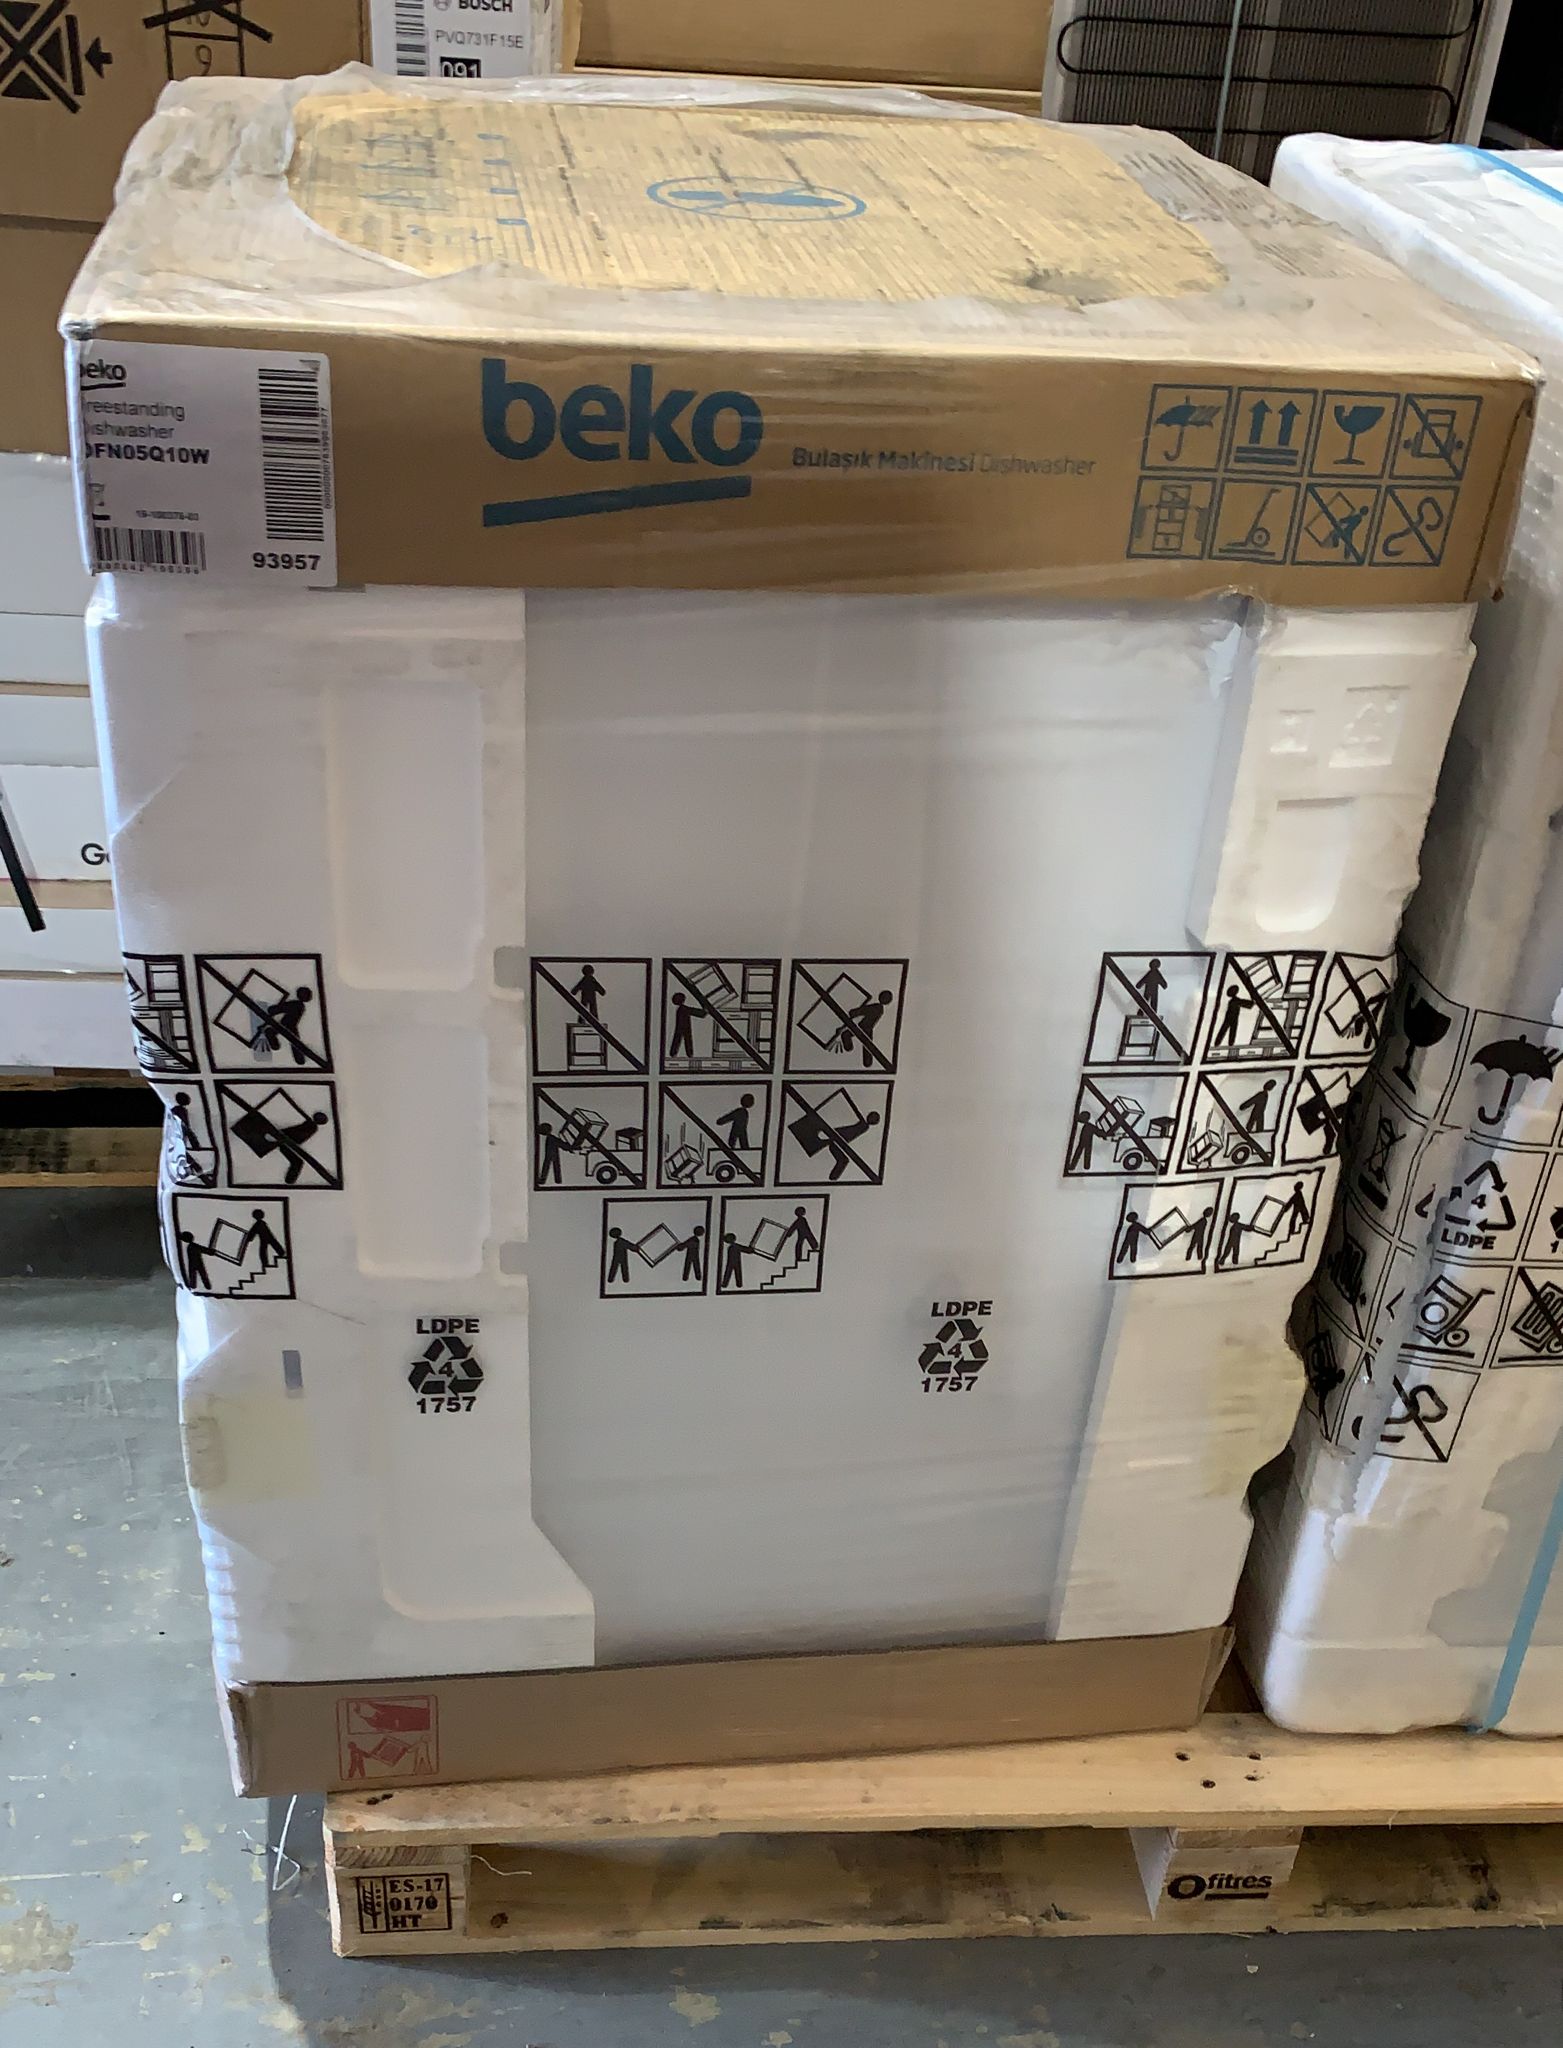 Beko DFN05Q10W Freestanding White Full size Dishwasher 5396